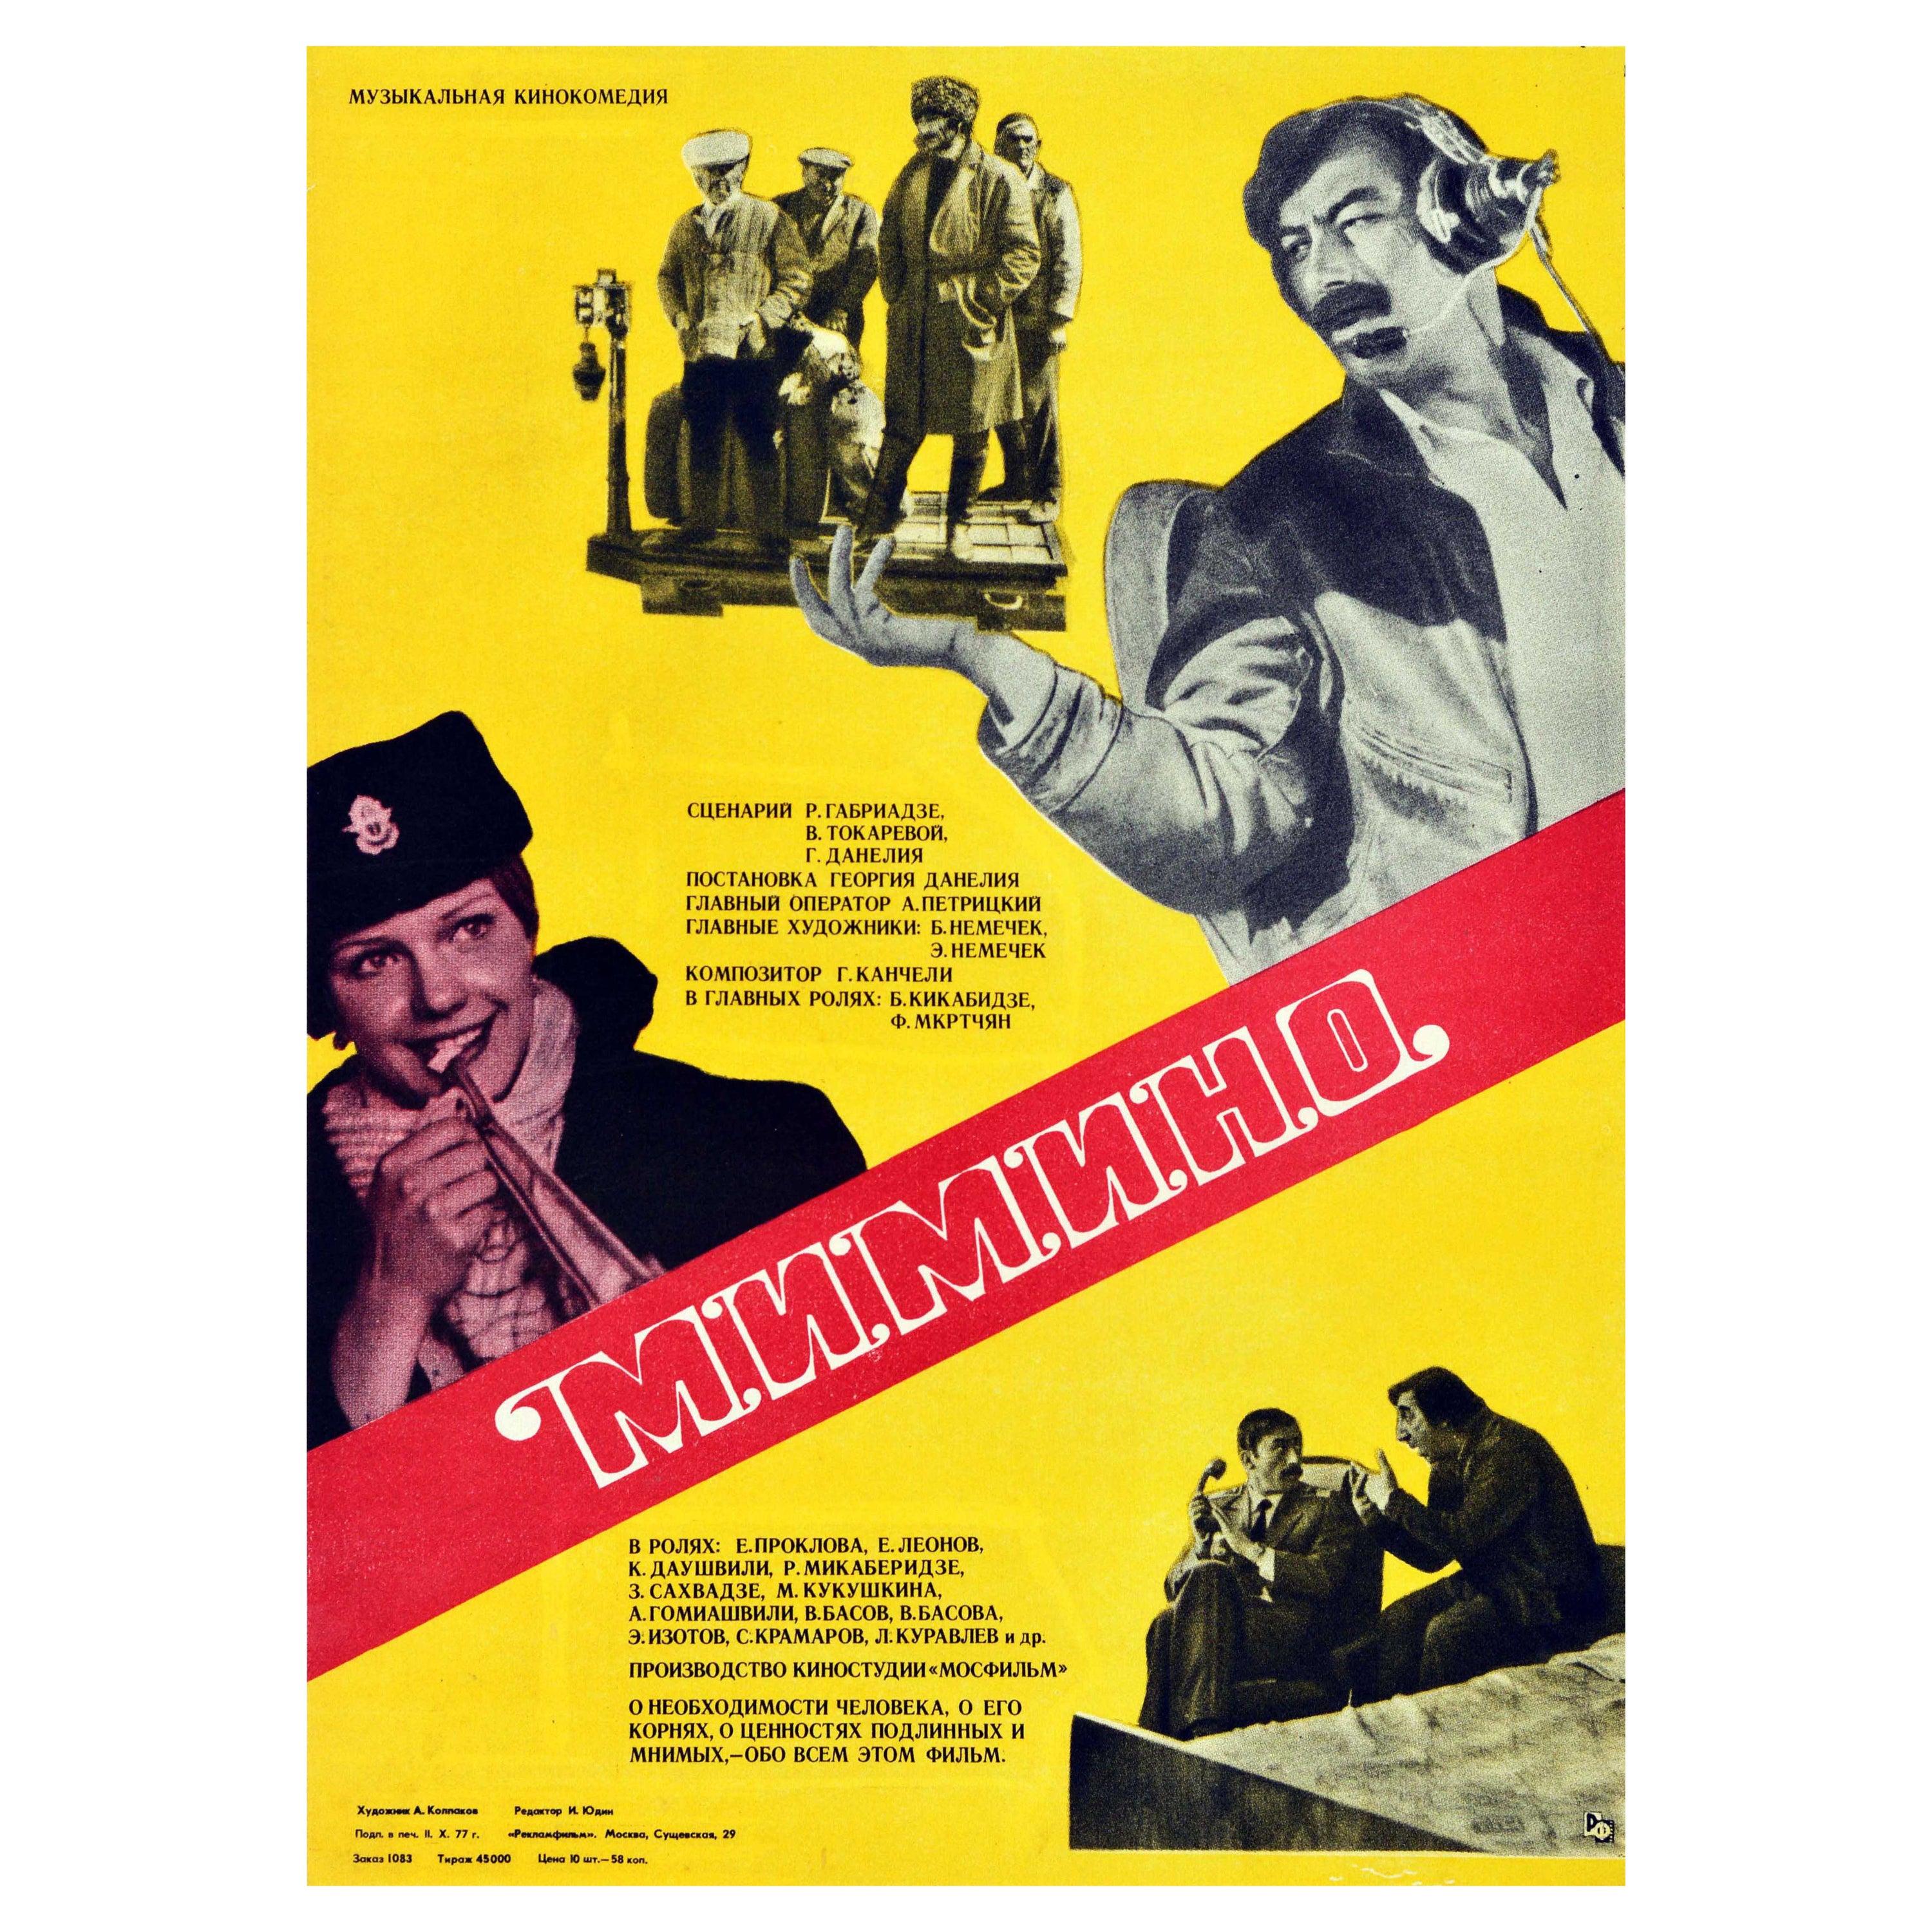 Original Vintage Film Poster For Mimino USSR Comedy Movie Photomontage Design